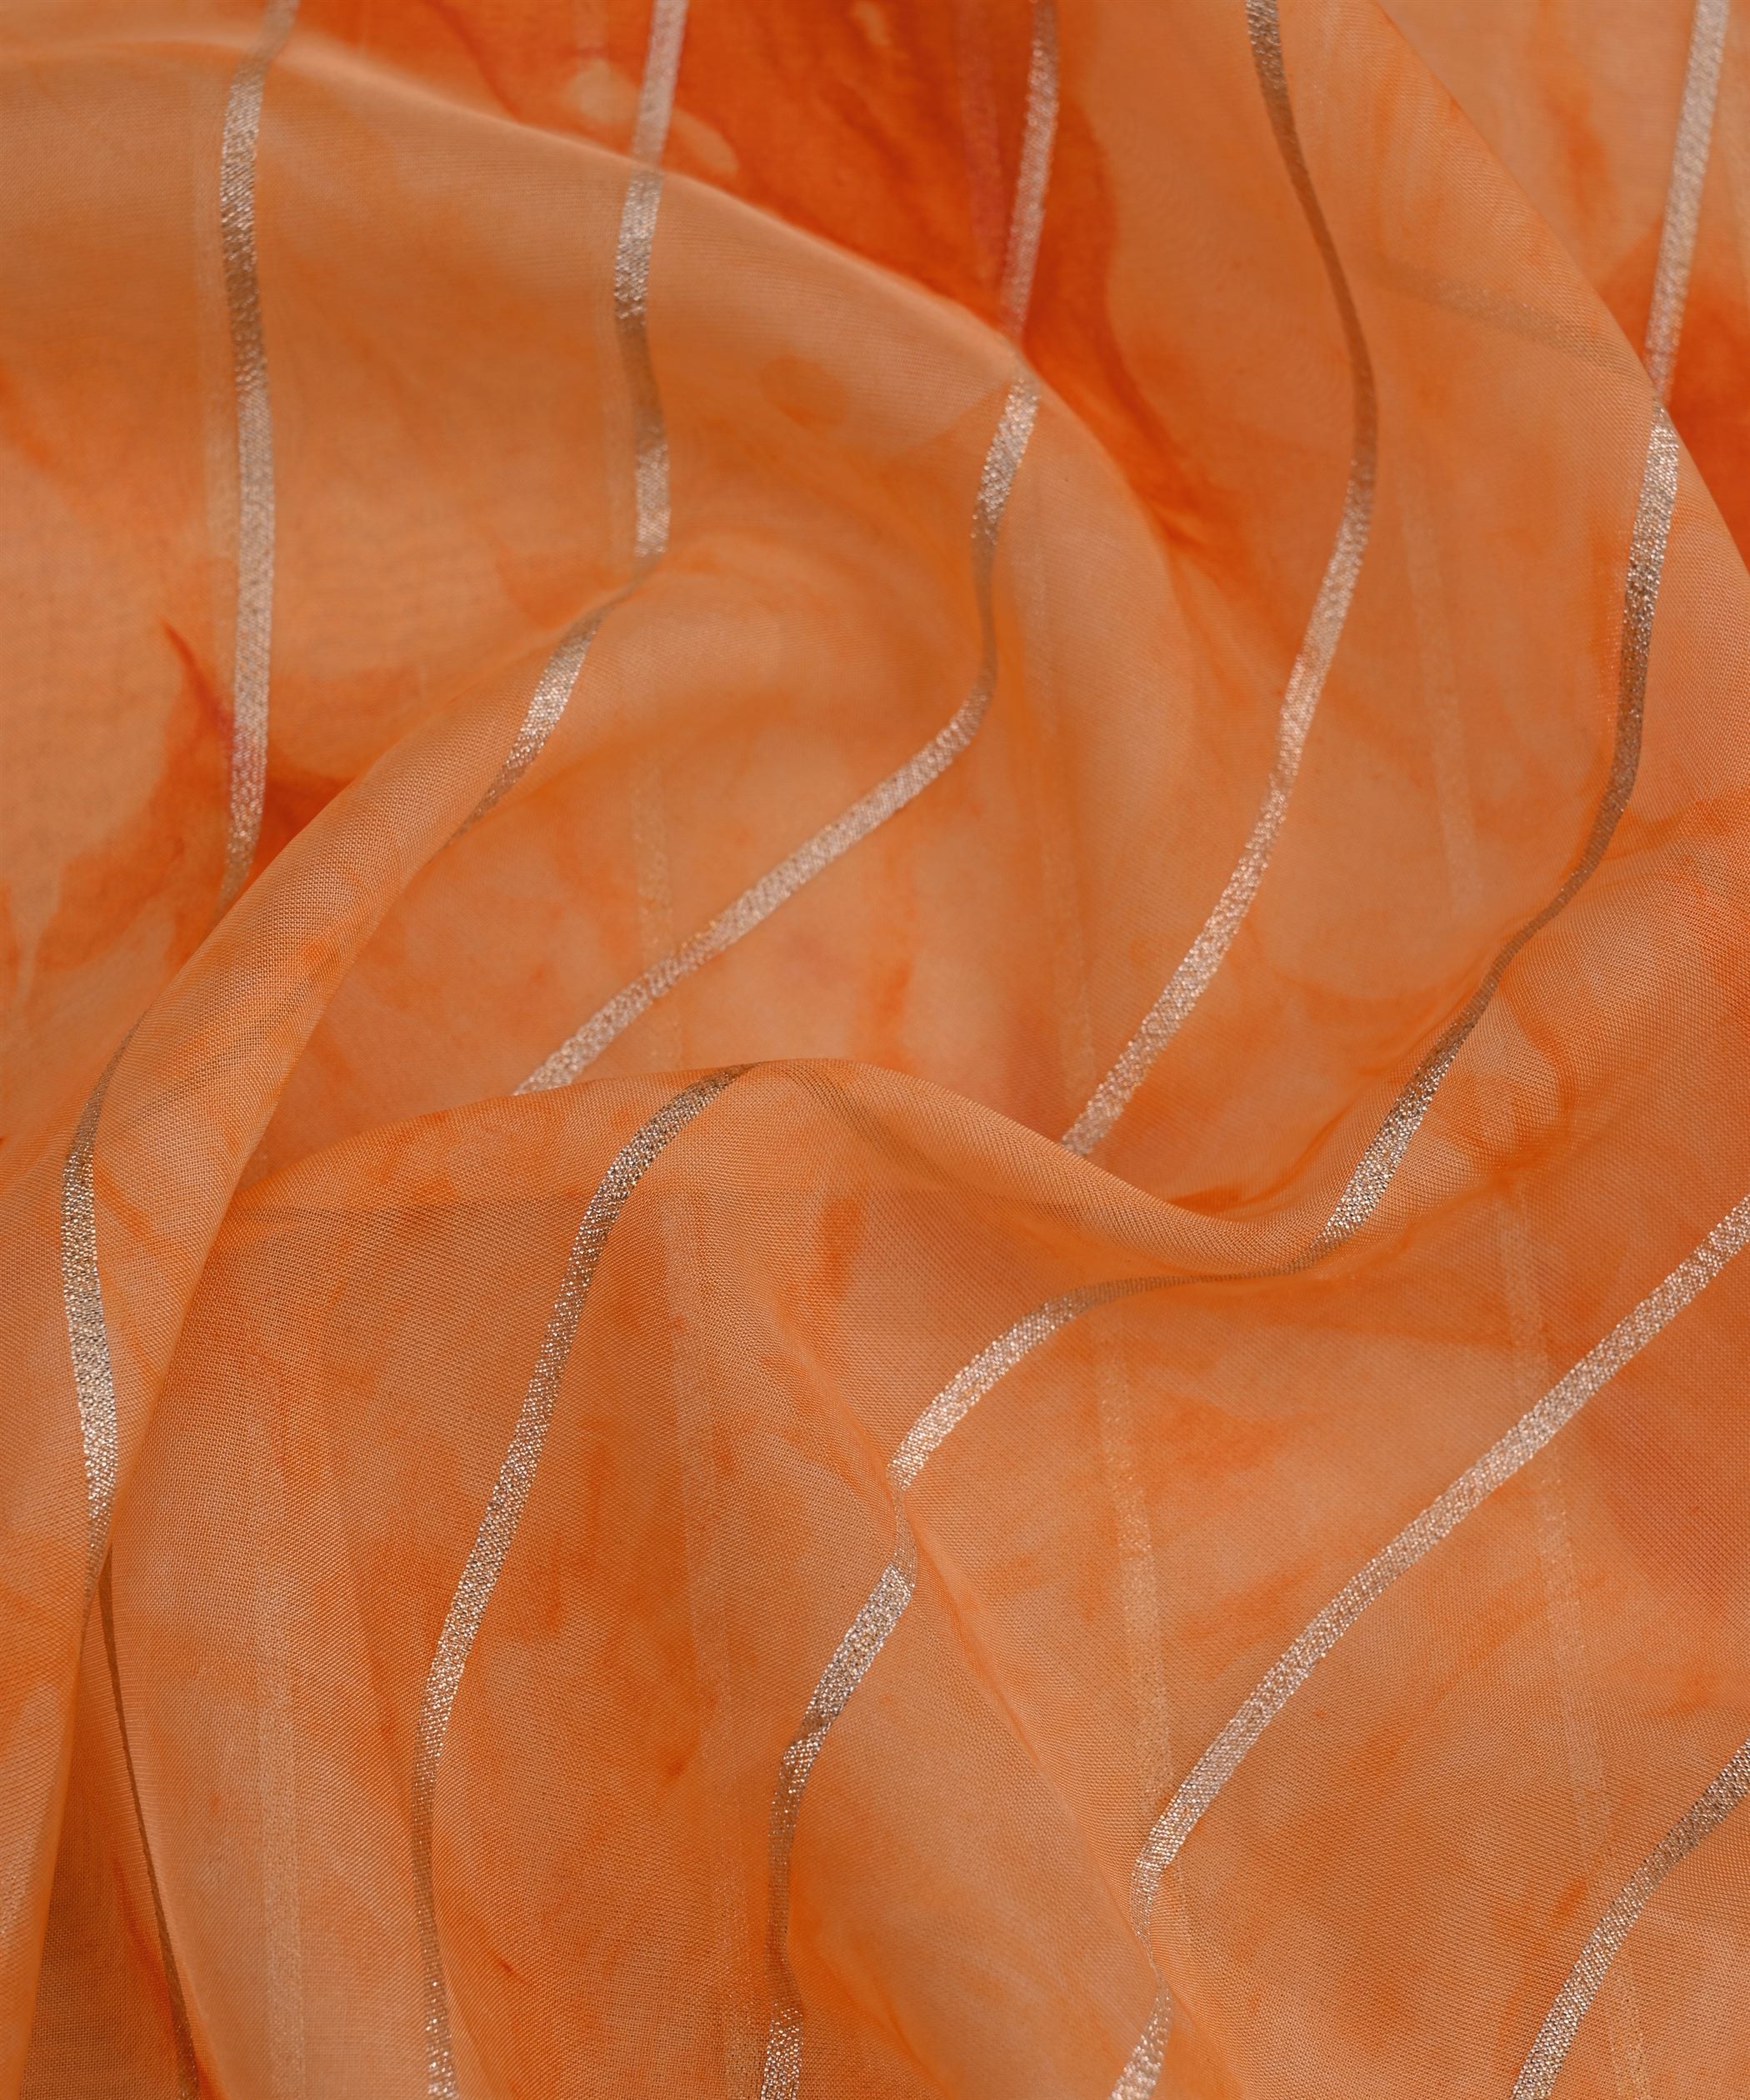 Orange Organza Fabric with Silver Lining